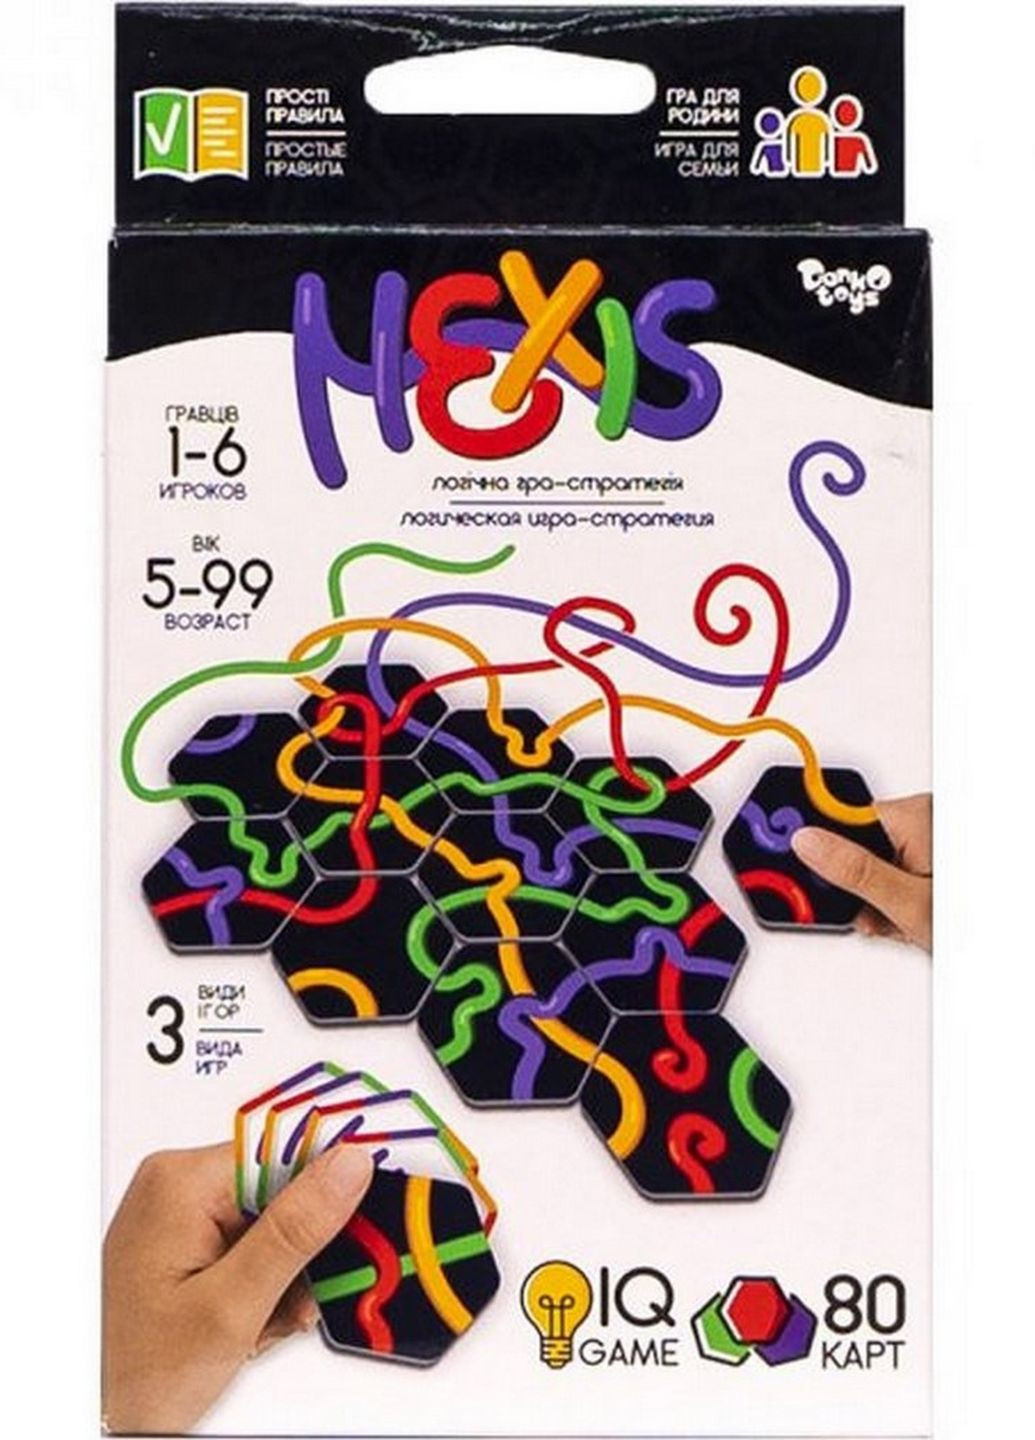 Настольная развлекательная игра "Hexis" G-HEX-01-01 рус Danko Toys (262085404)